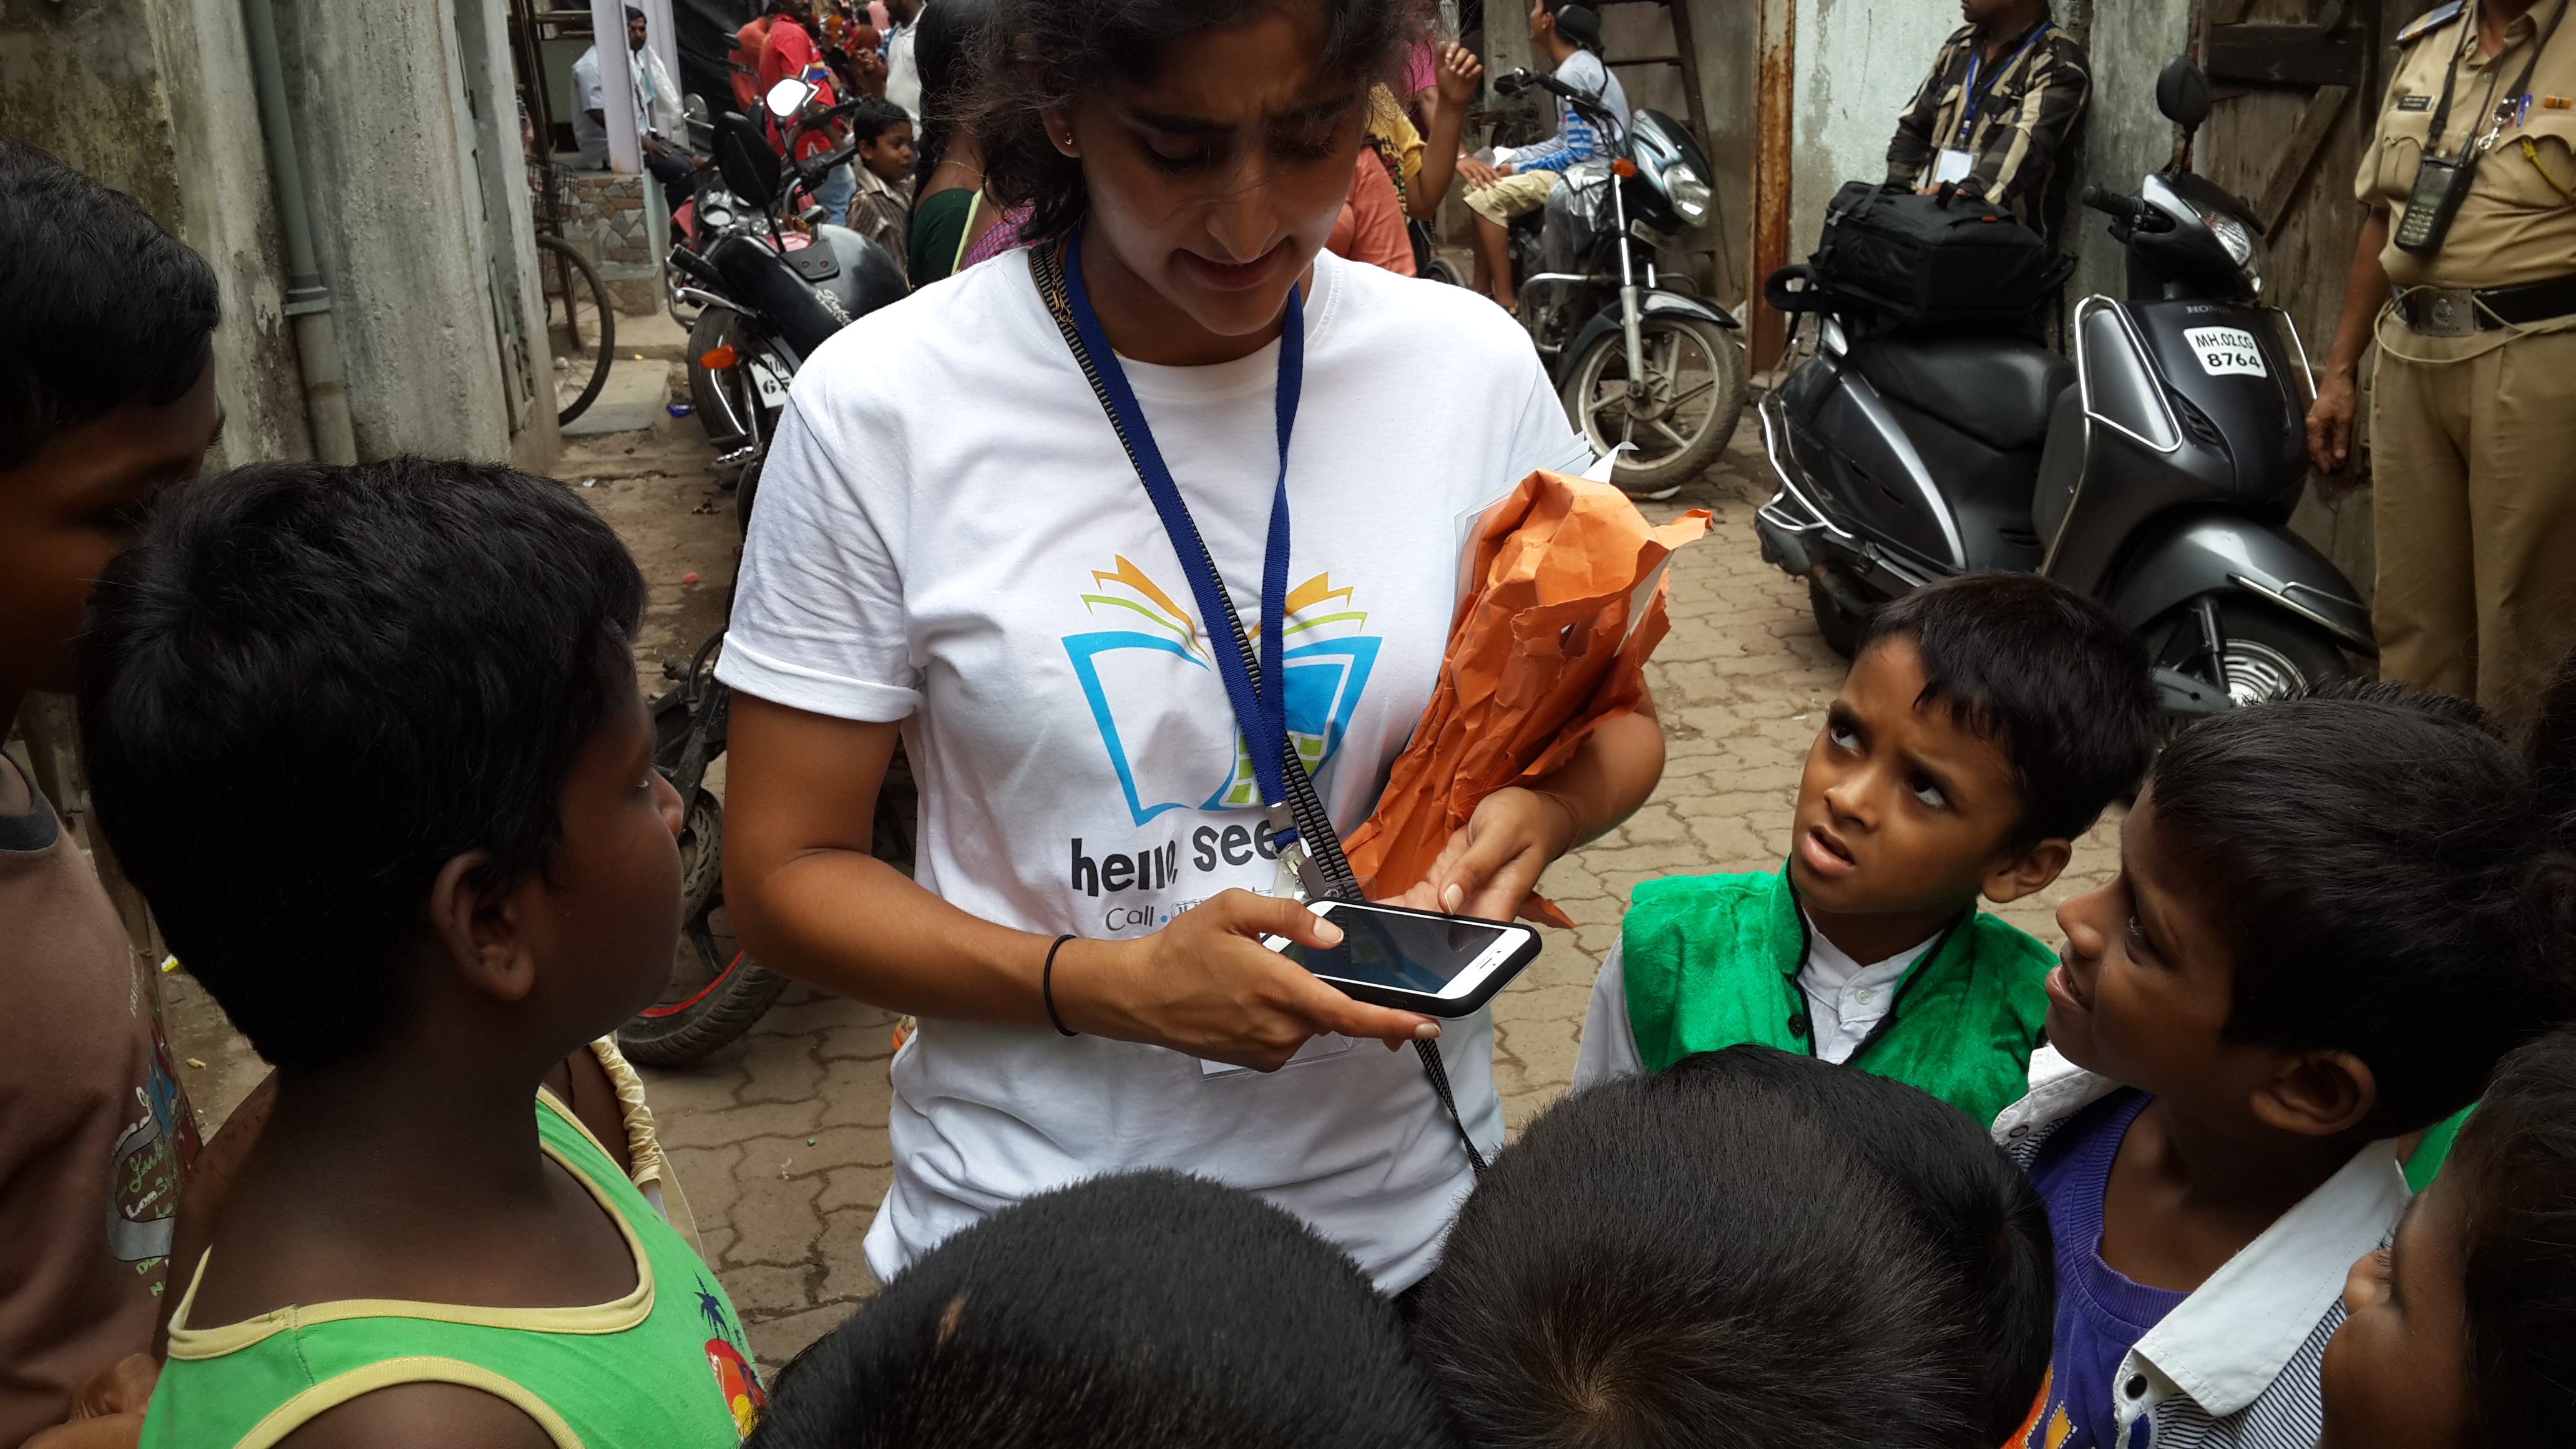 Kasturi distributing flyers in Dharavi. July 2015.